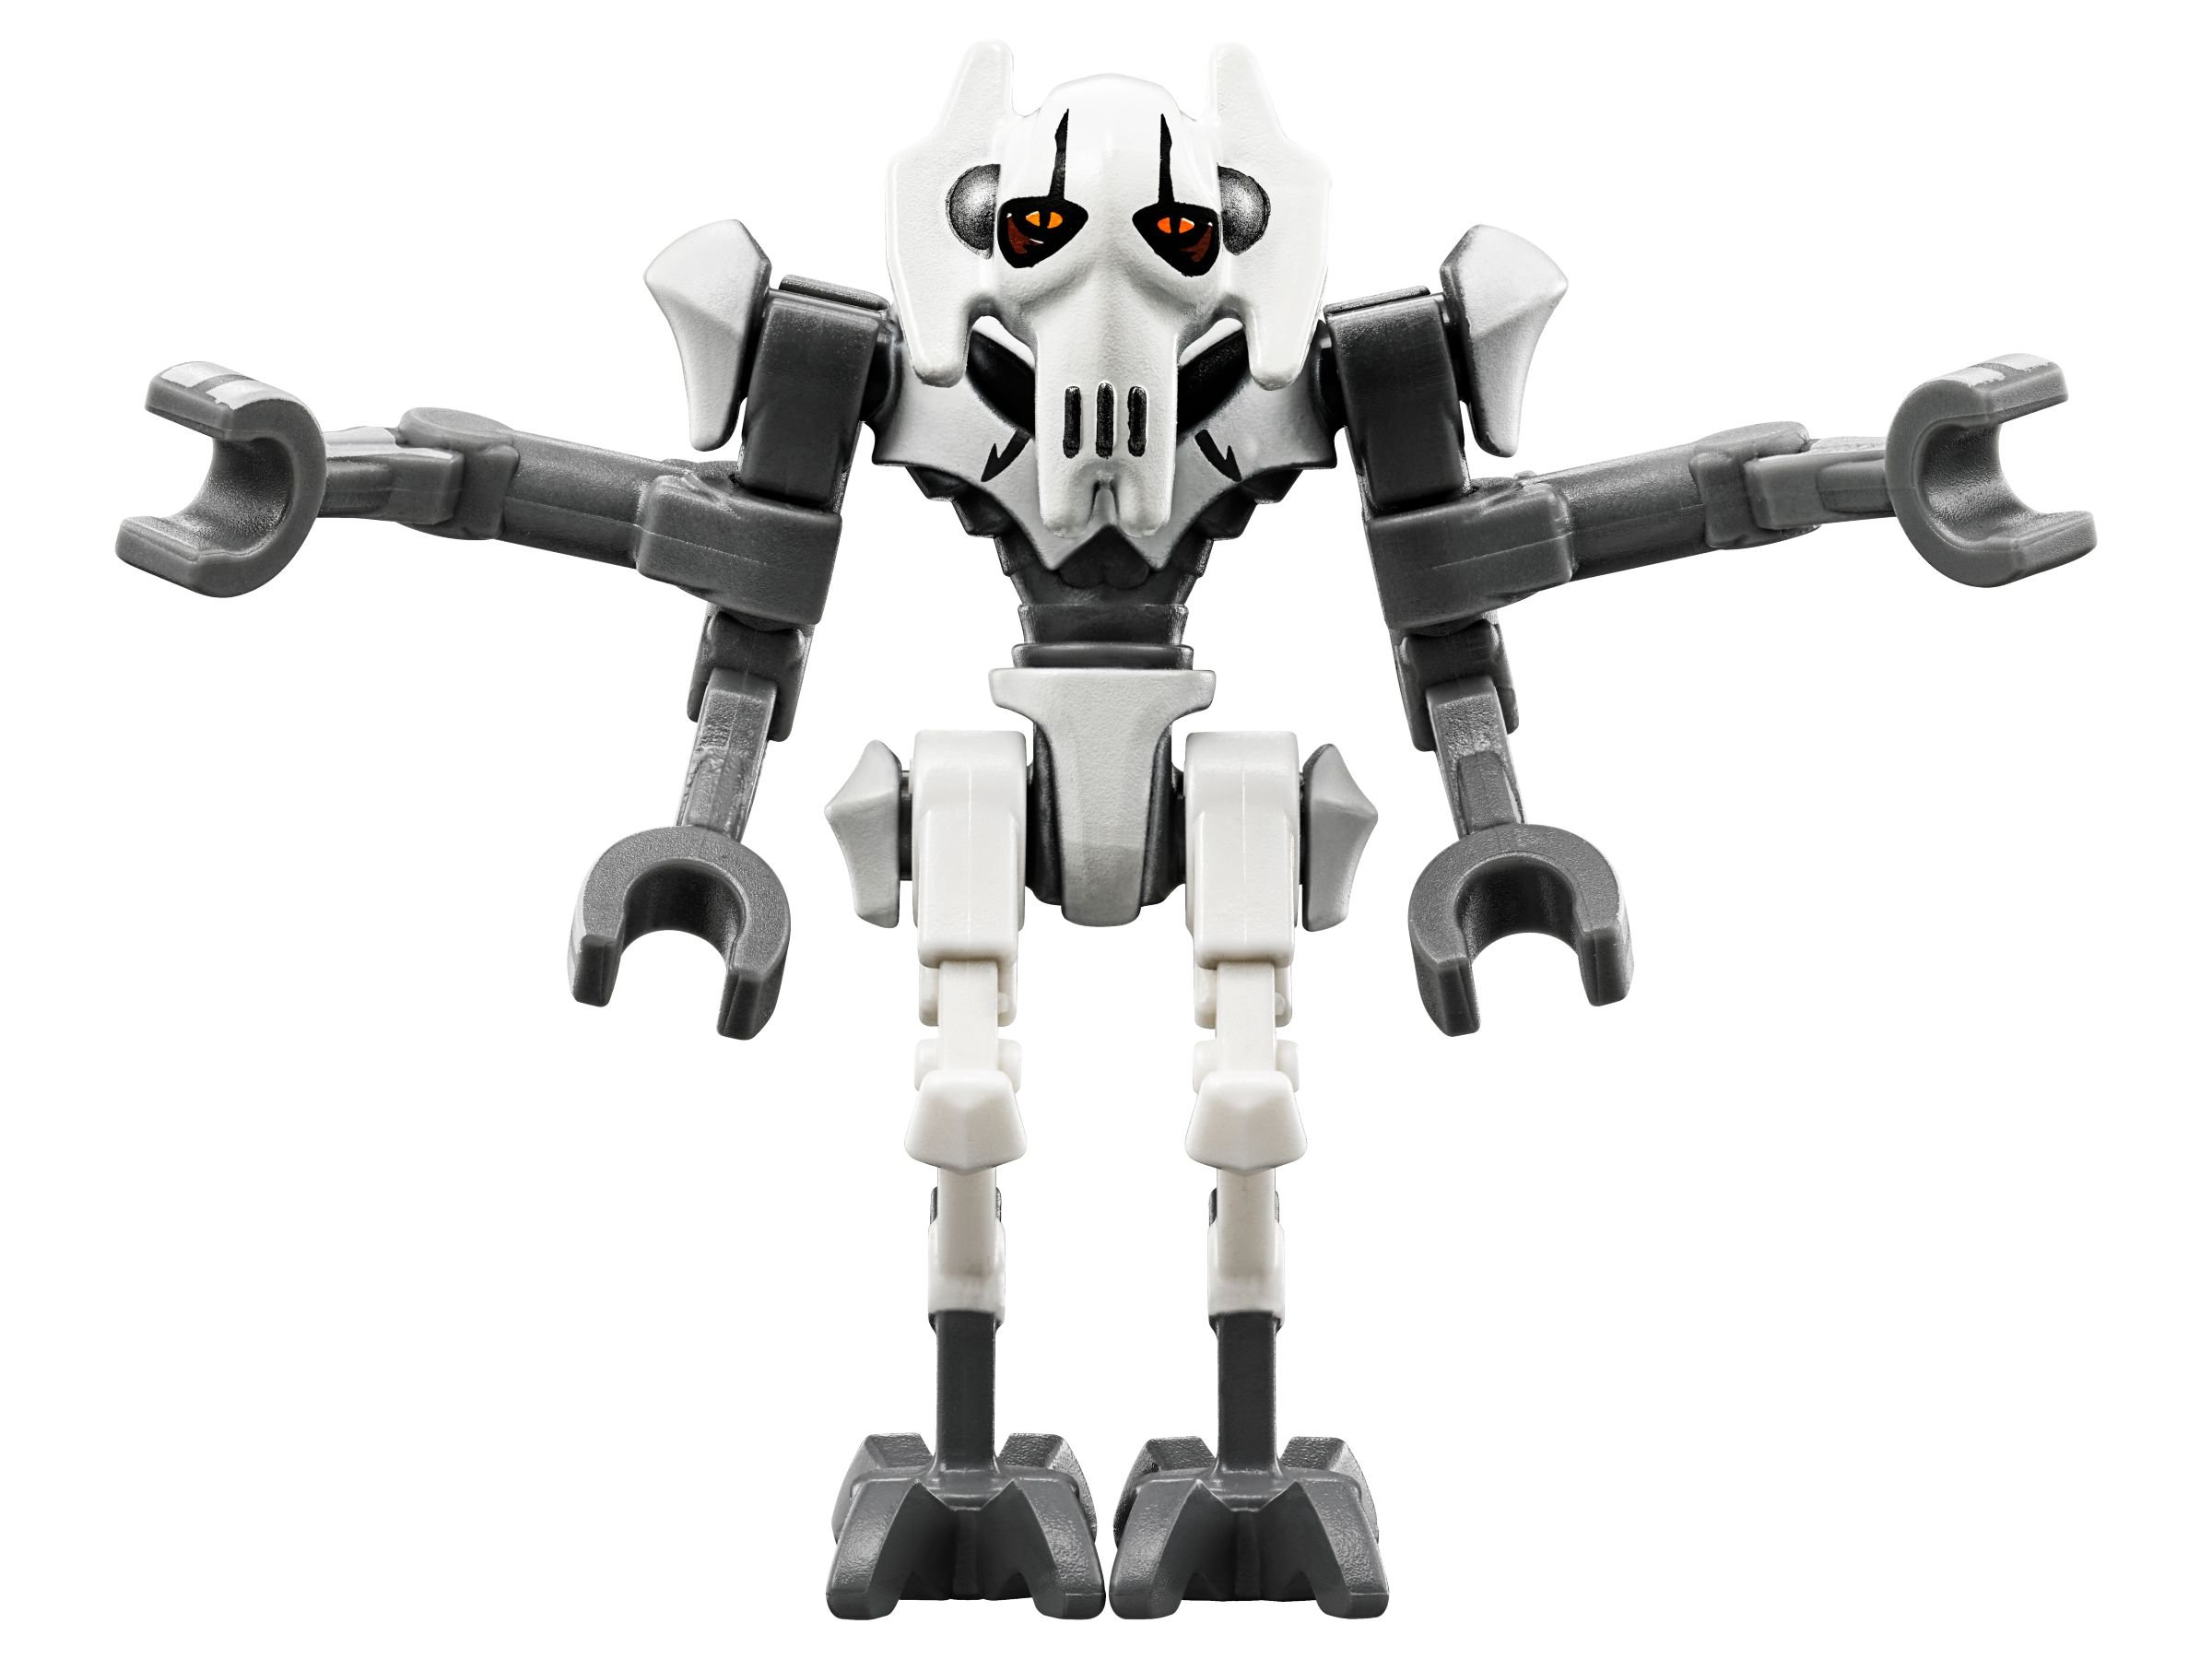 LEGO Star Wars 75199 General Grievous Combat Speeder LEGO_75199_alt5.jpg